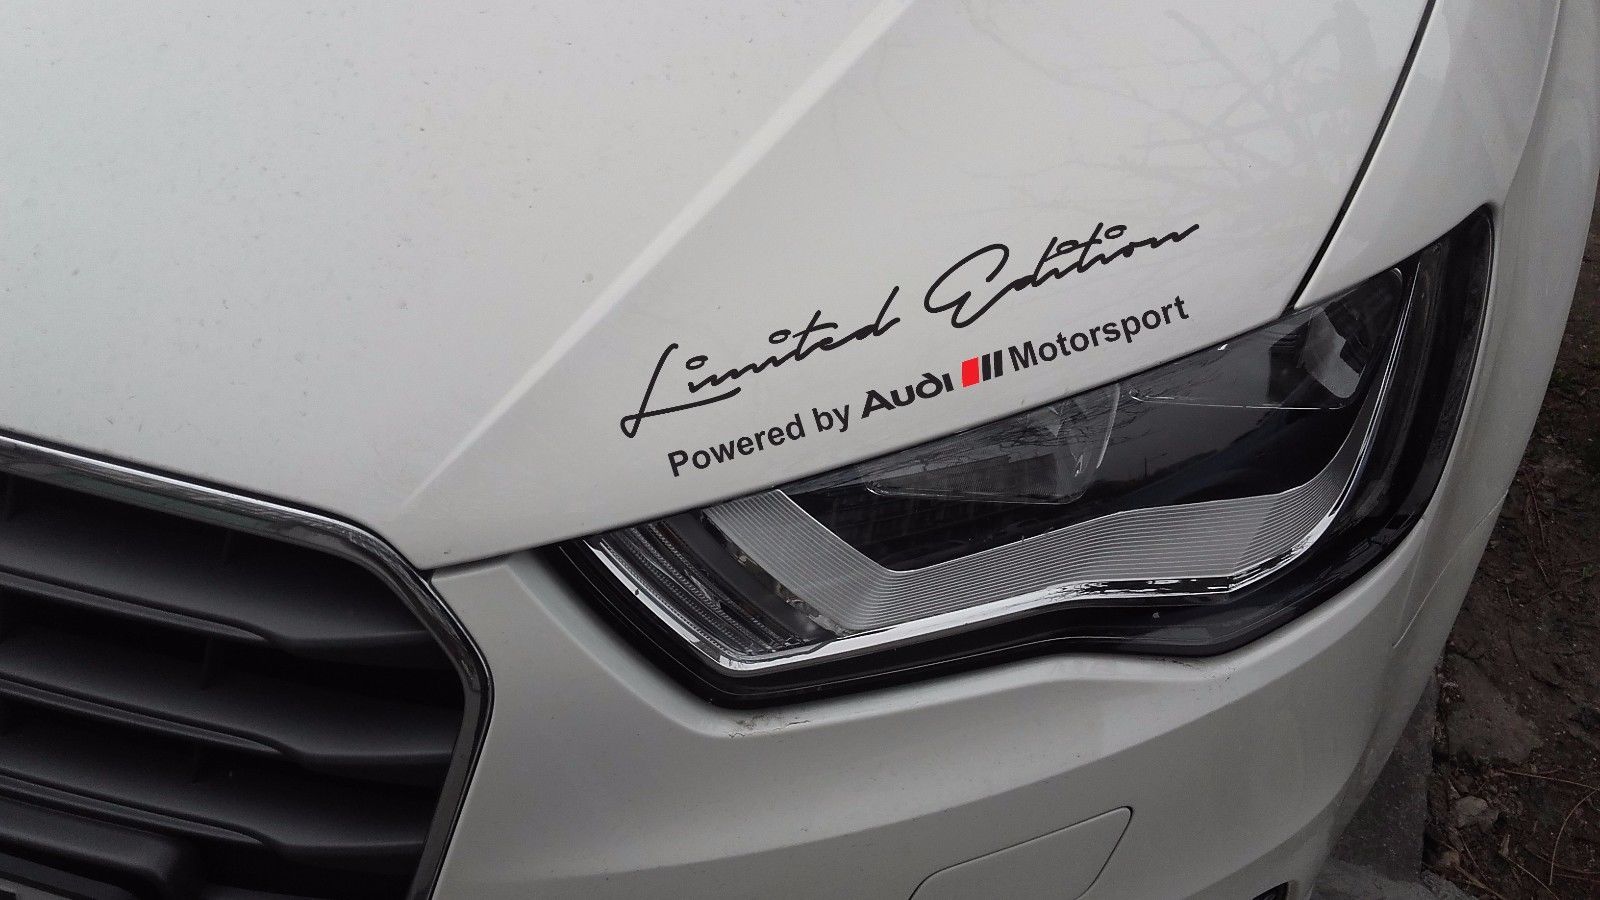 2 x Limited Edition Audi Motorsport Decal Sticker Compatibel met Audi-modellen